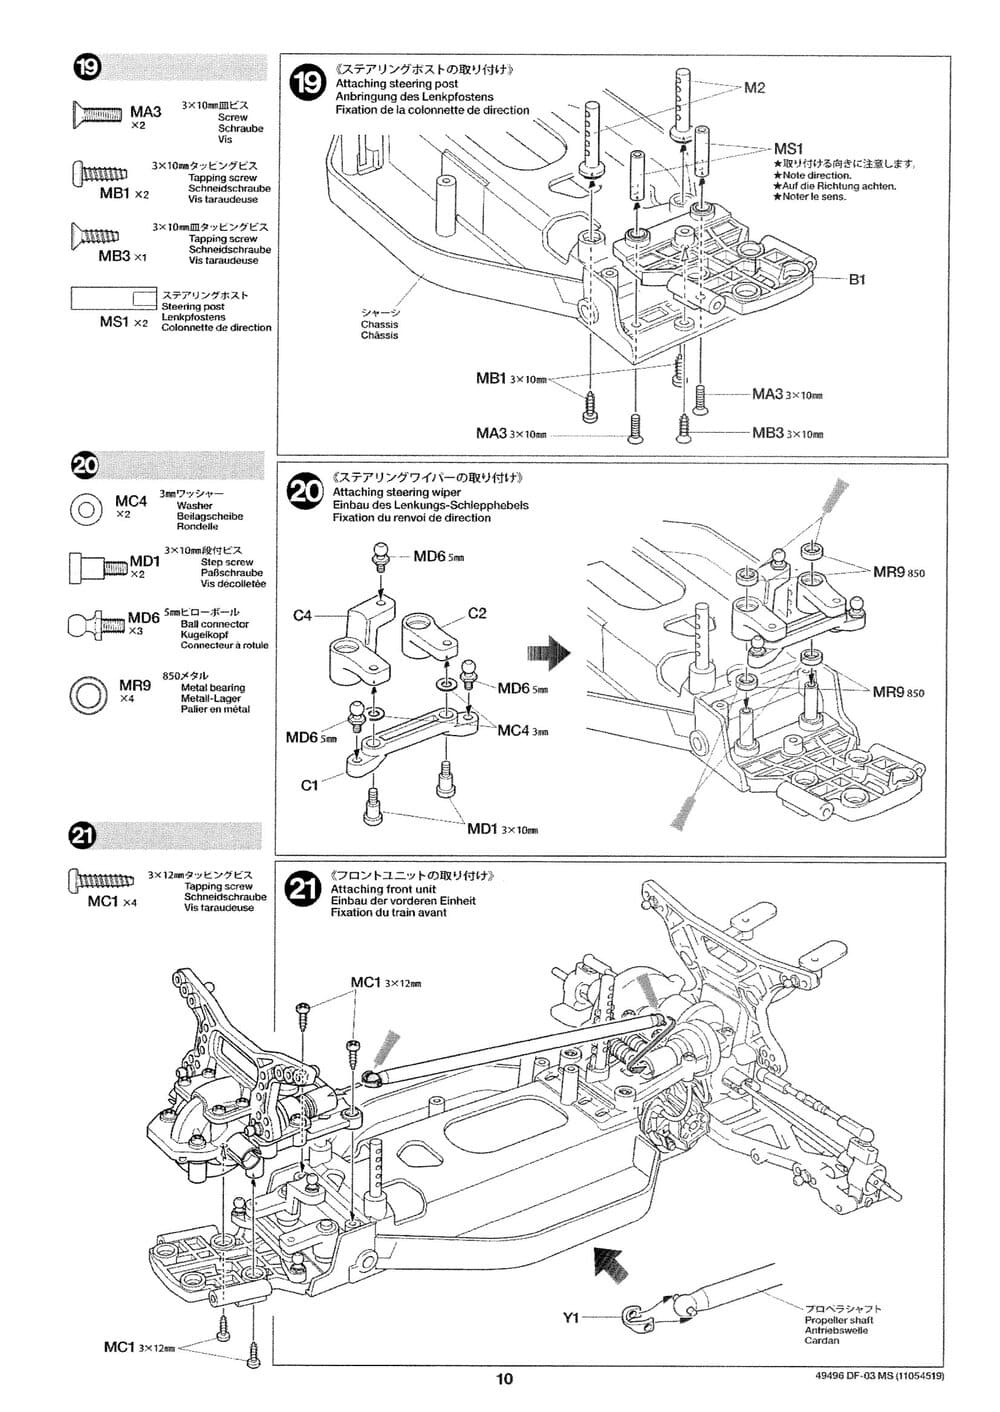 Tamiya - DF-03 MS Chassis Chassis - Manual - Page 10